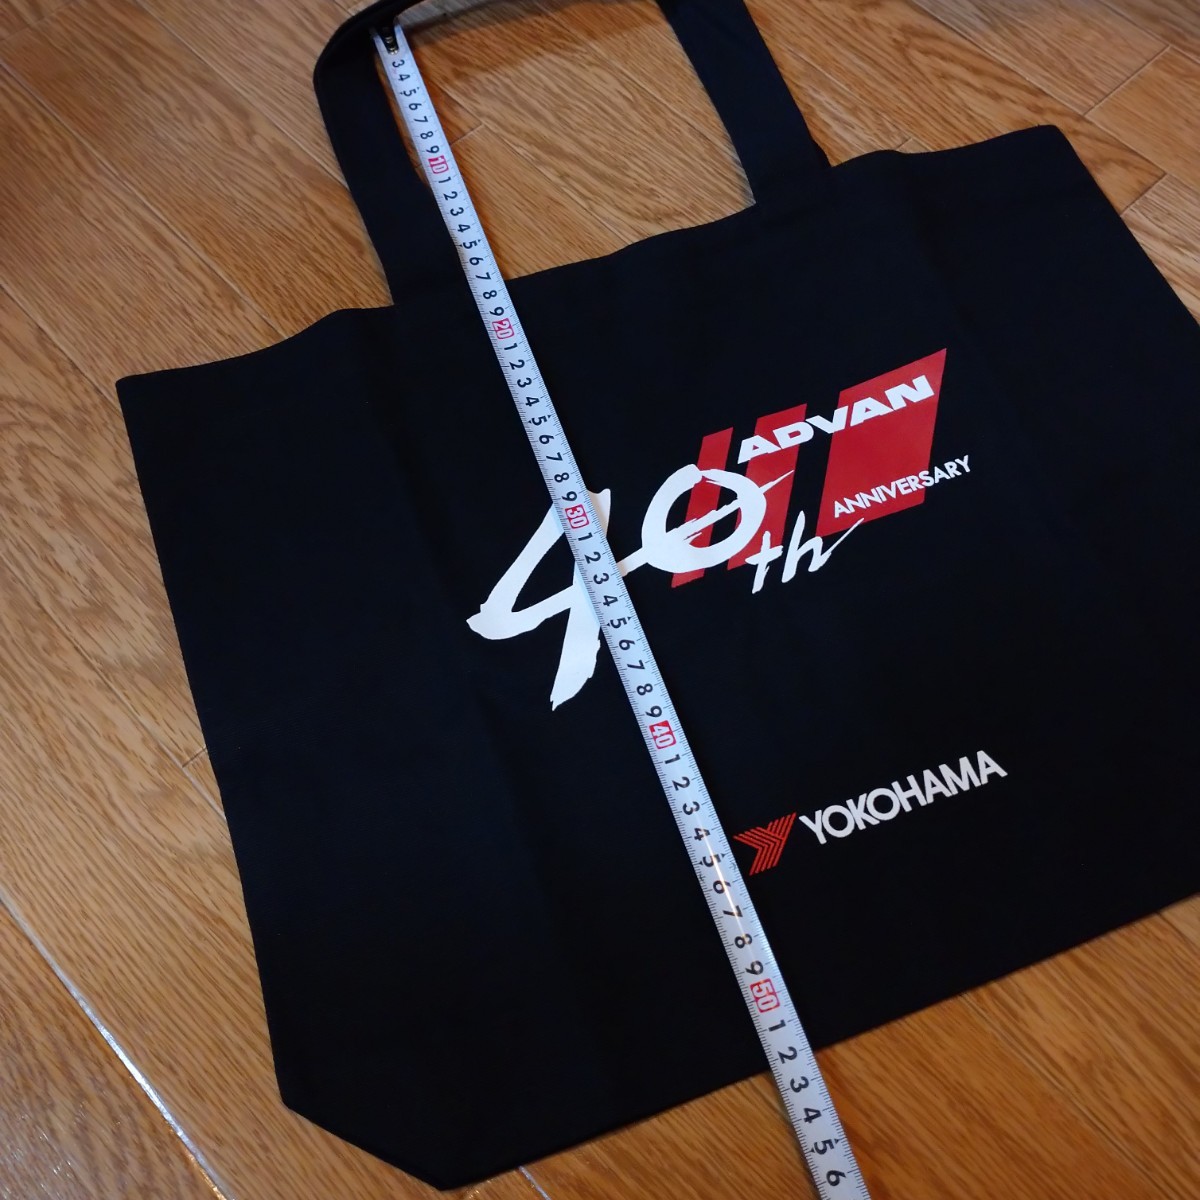 40th ADVAN YOKOHAMA TIRE anniversary ヨコハマタイヤ バッグ 記念 限定 アドバン グッズ コレクション ロゴ bag collection logo_画像5